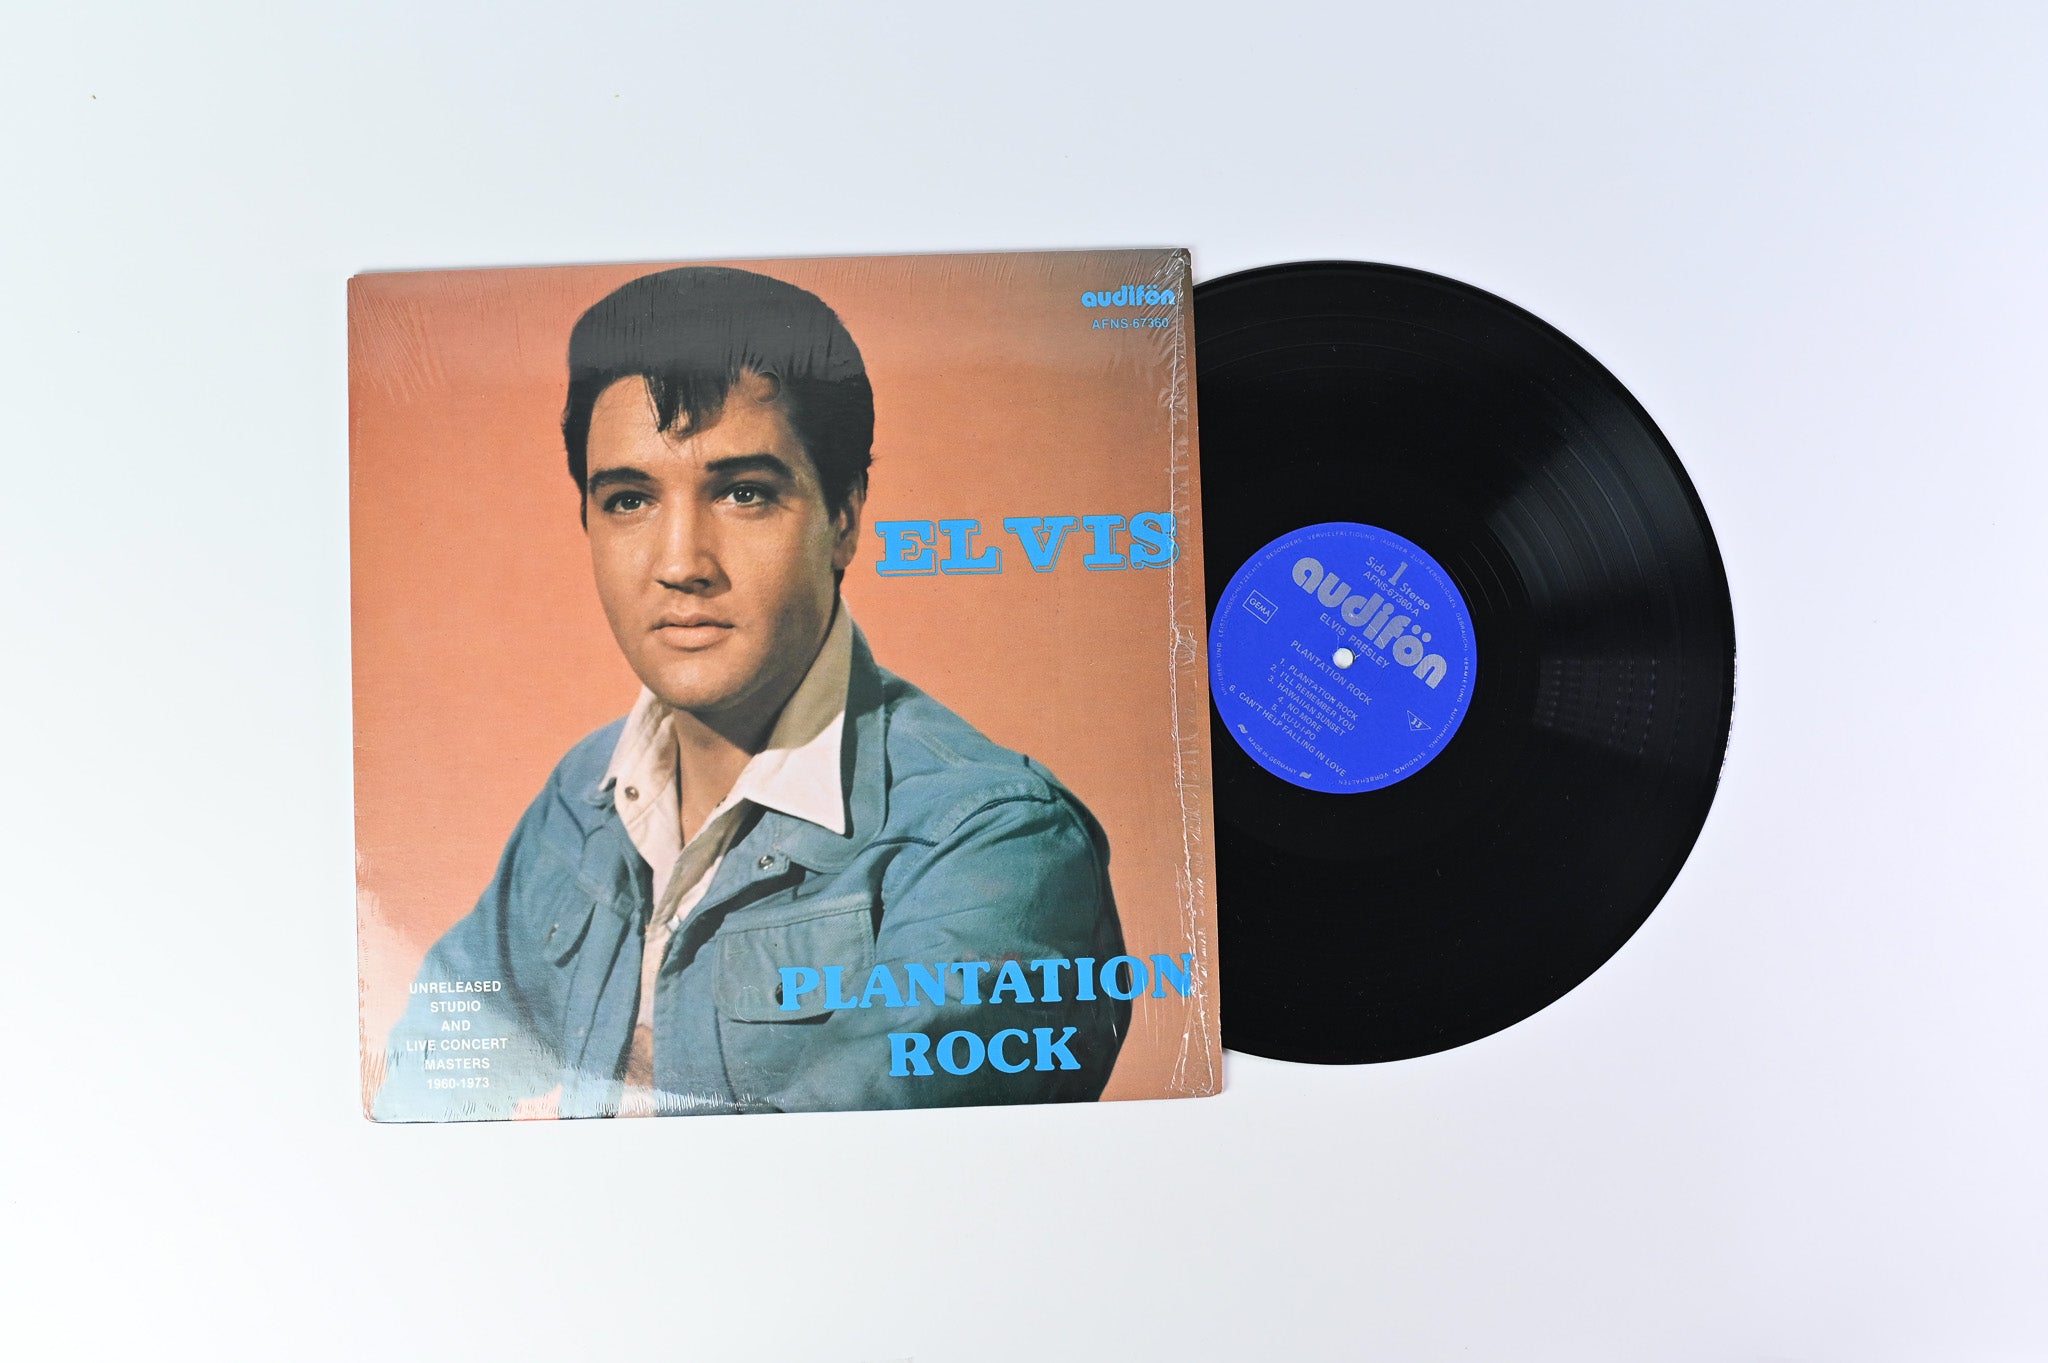 Elvis Presley - Plantation Rock on Audifon Unofficial Release